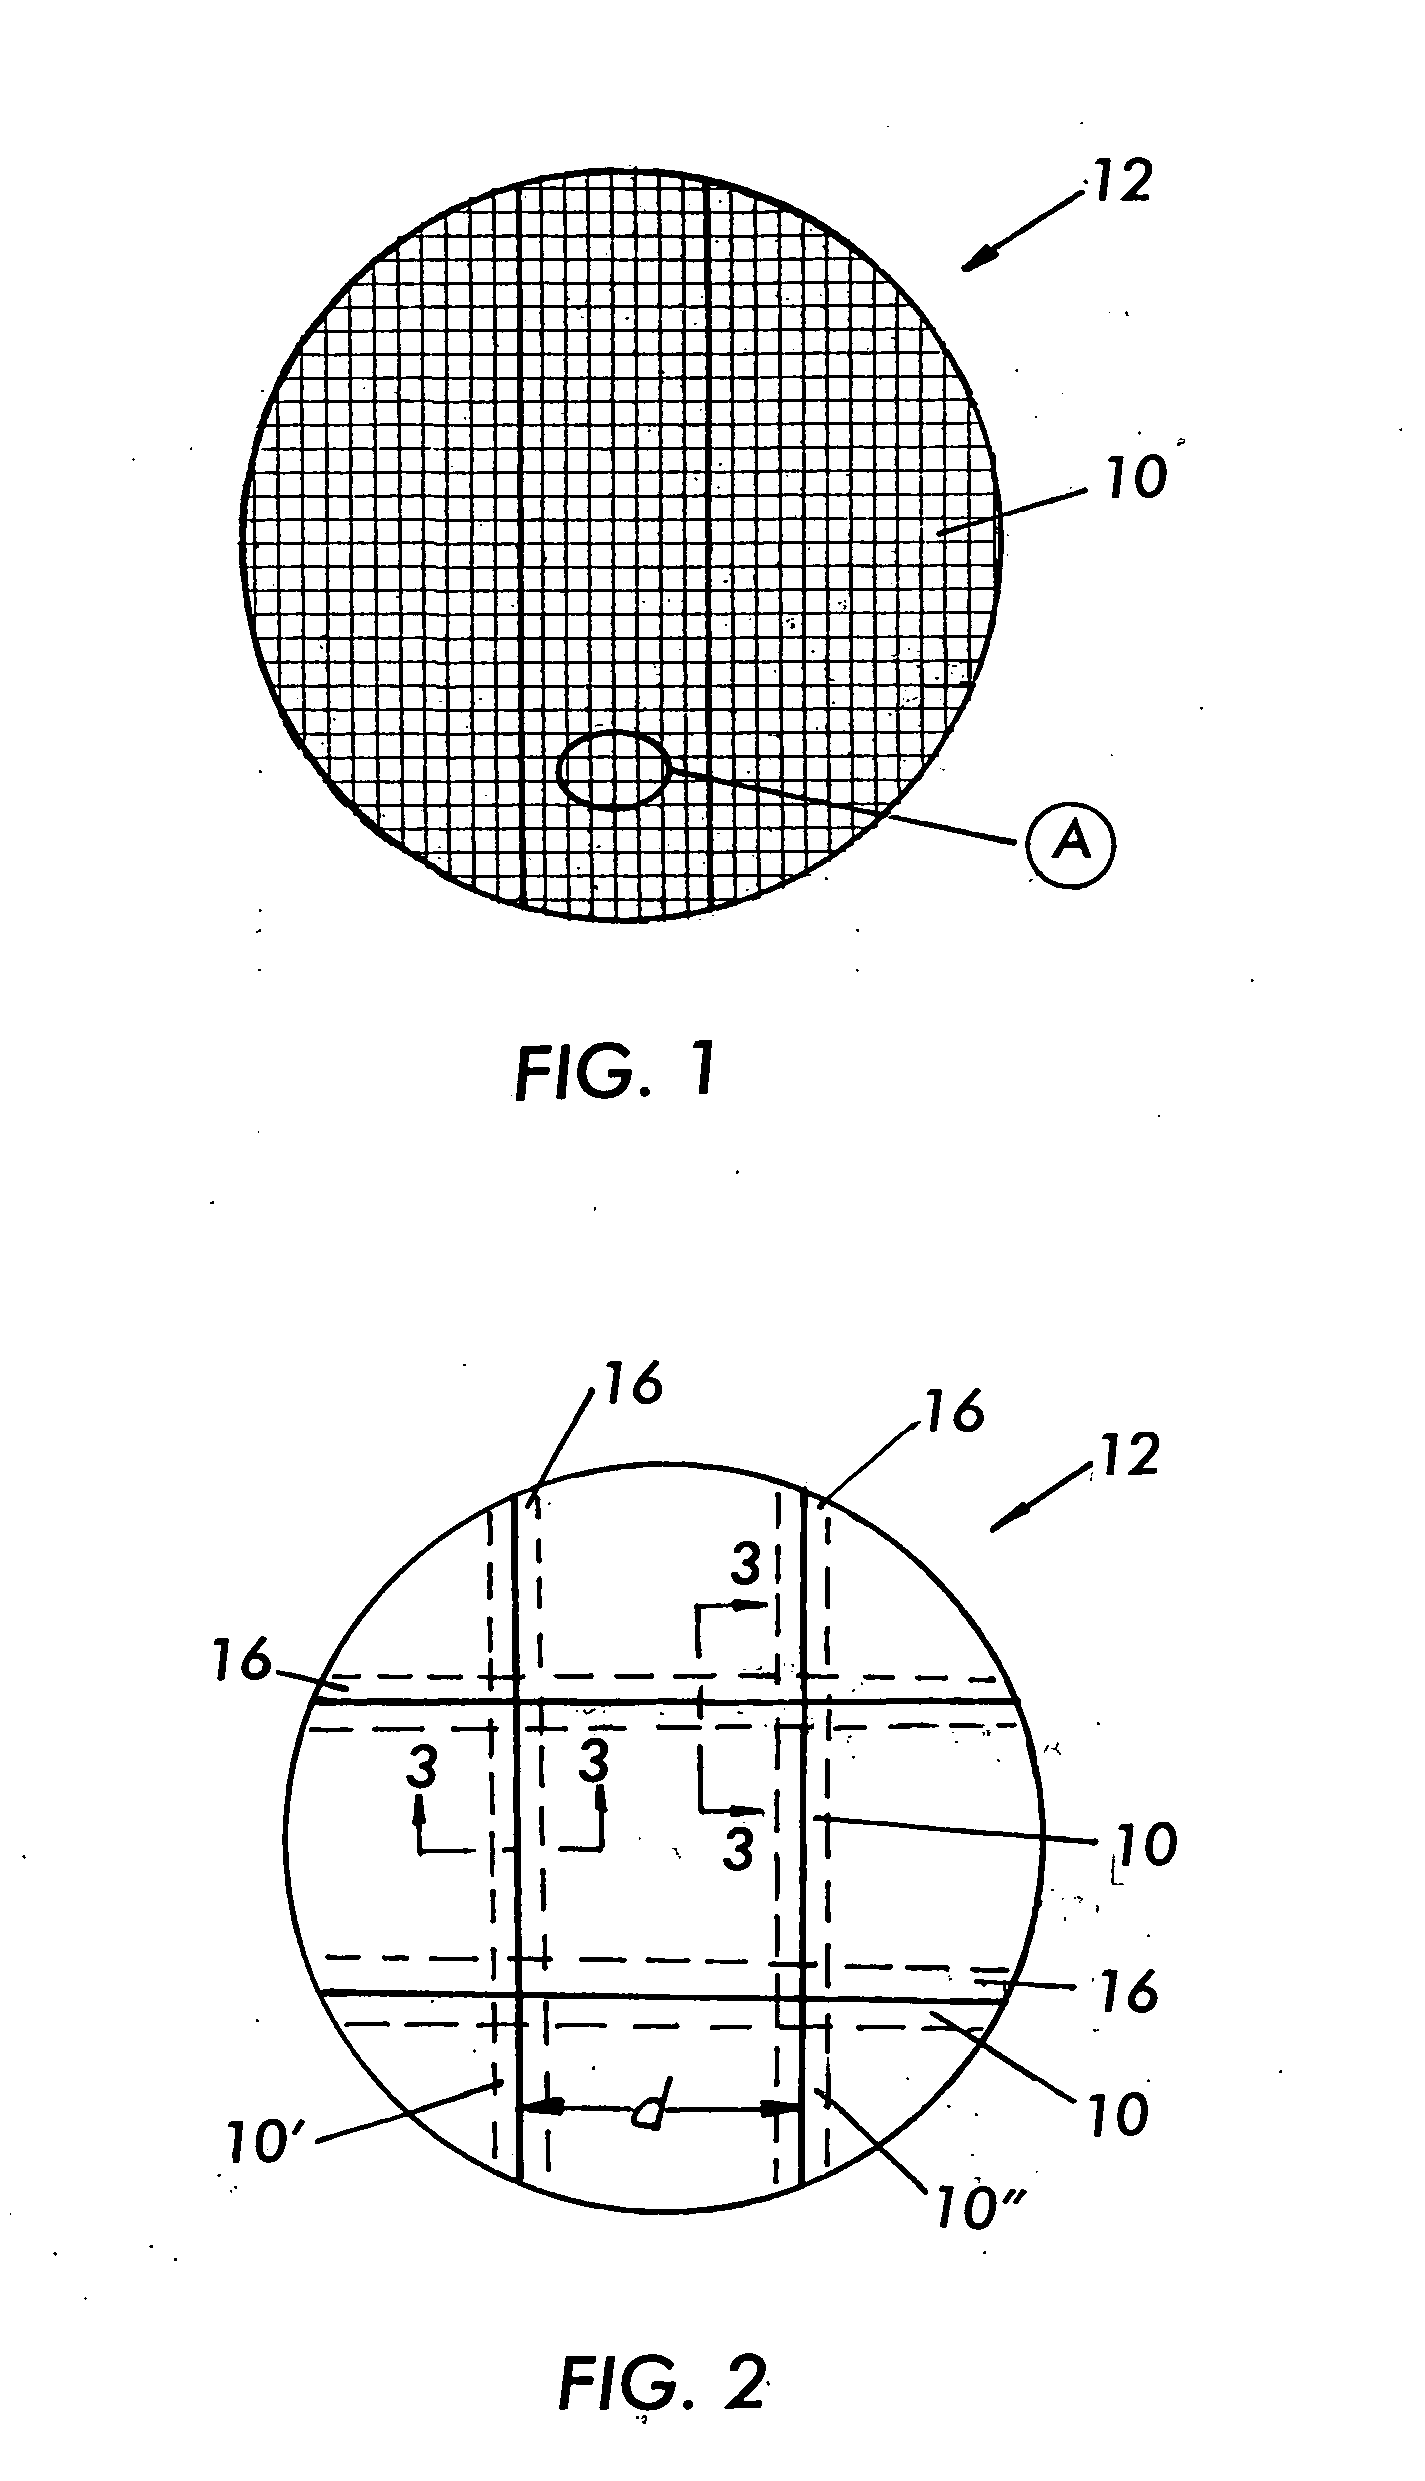 III-Nitride wafer fabrication